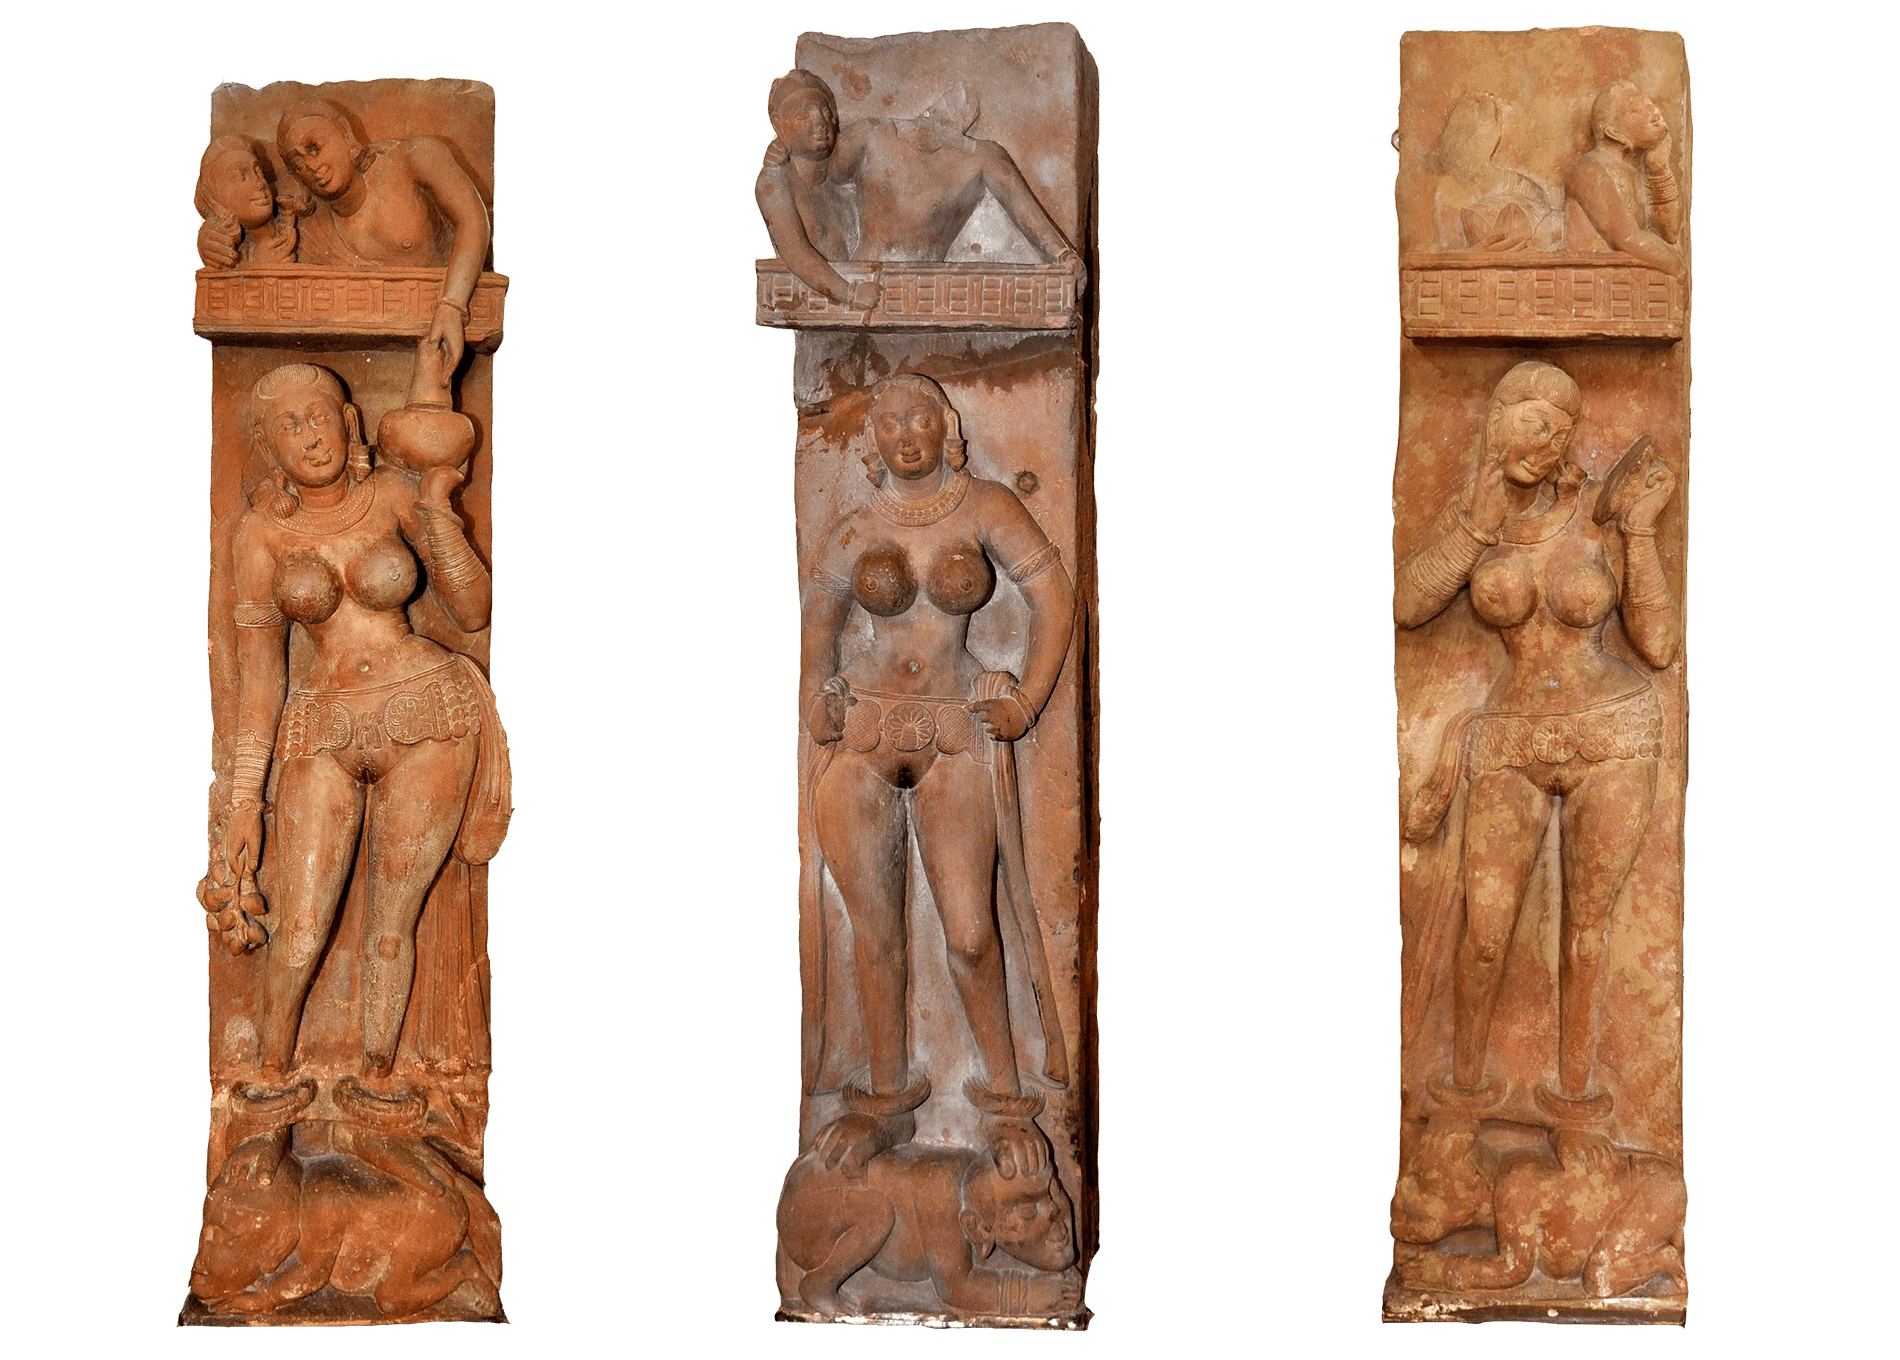 Bhutesvara Yakshis, 2nd century C.E., red sandstone, 64 inches high (Mathura Museum, India; photos: Biswarup Ganguly, CC BY 3.0)